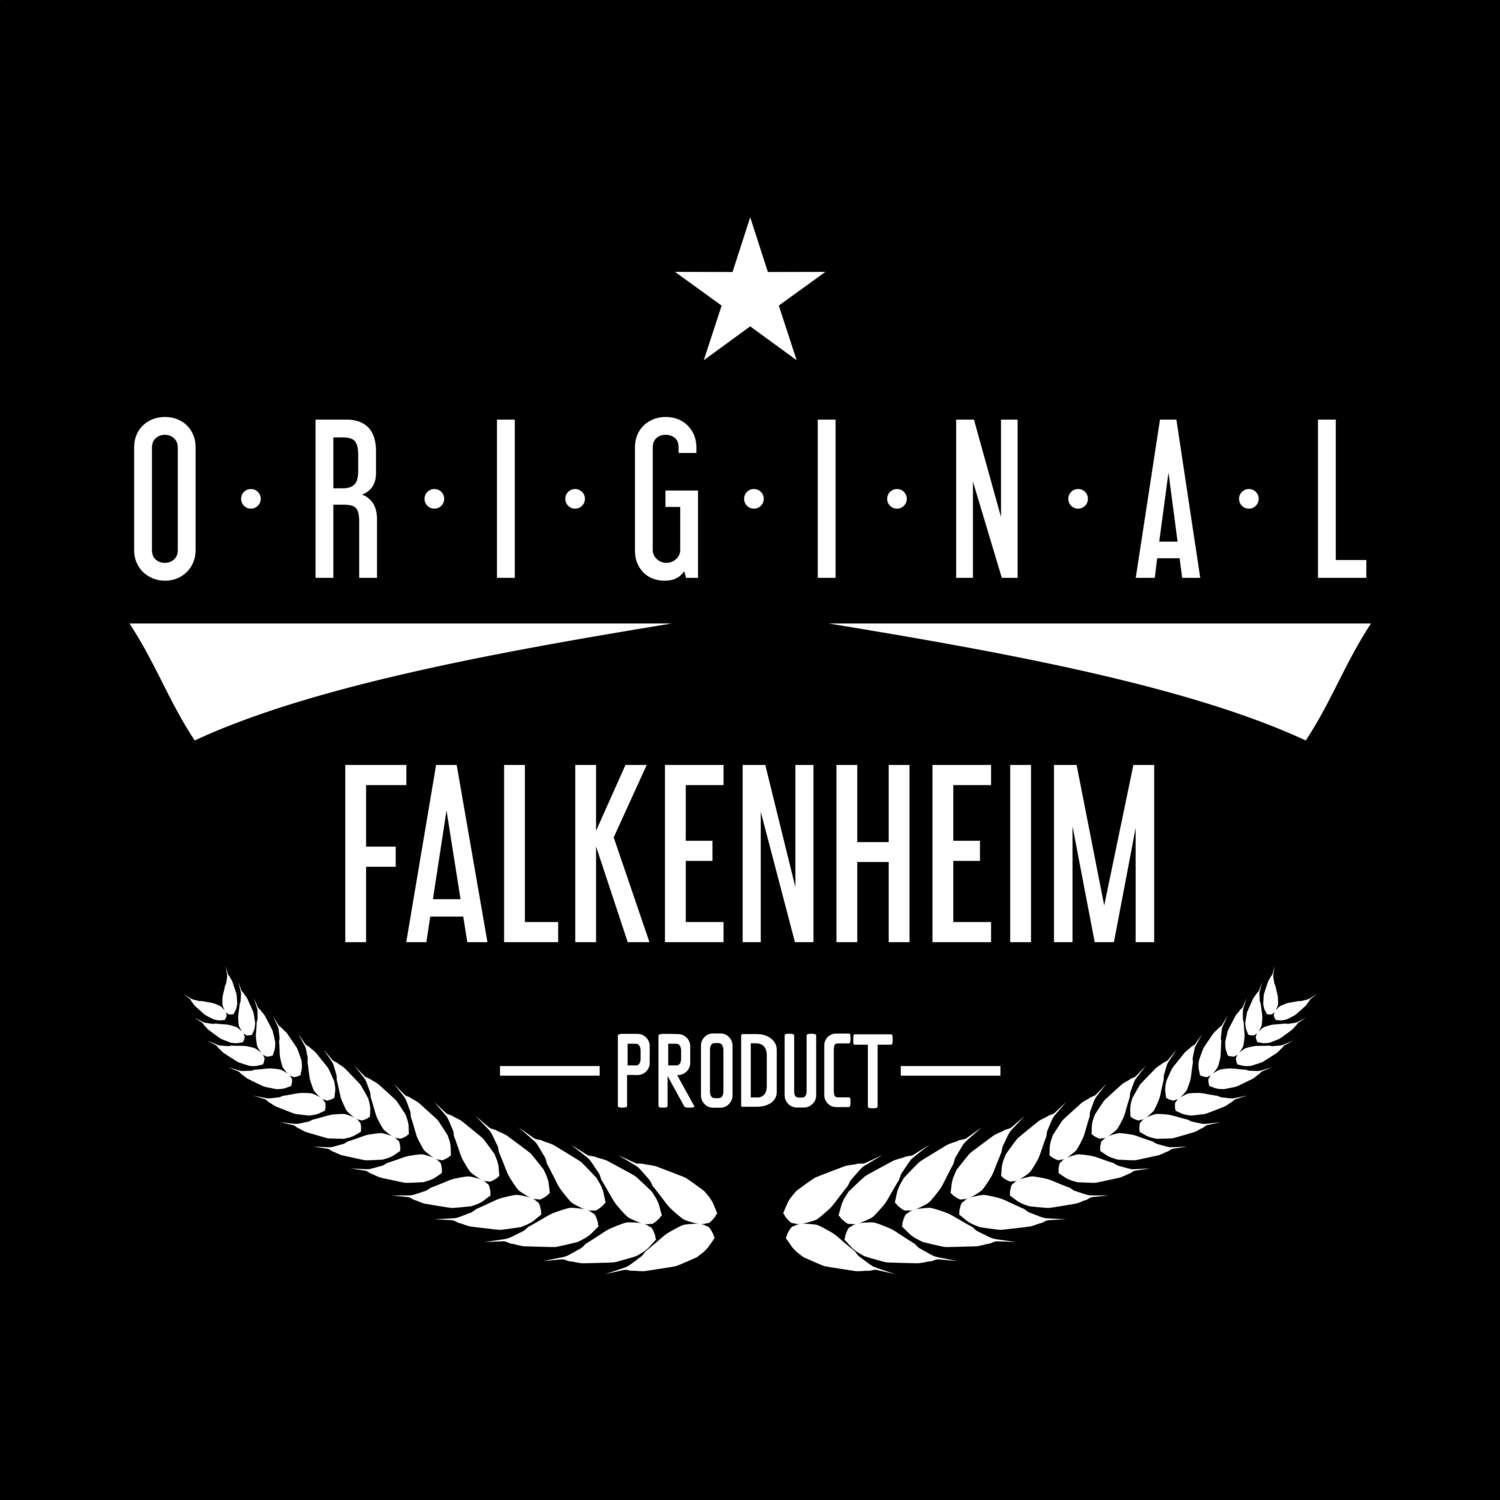 Falkenheim T-Shirt »Original Product«